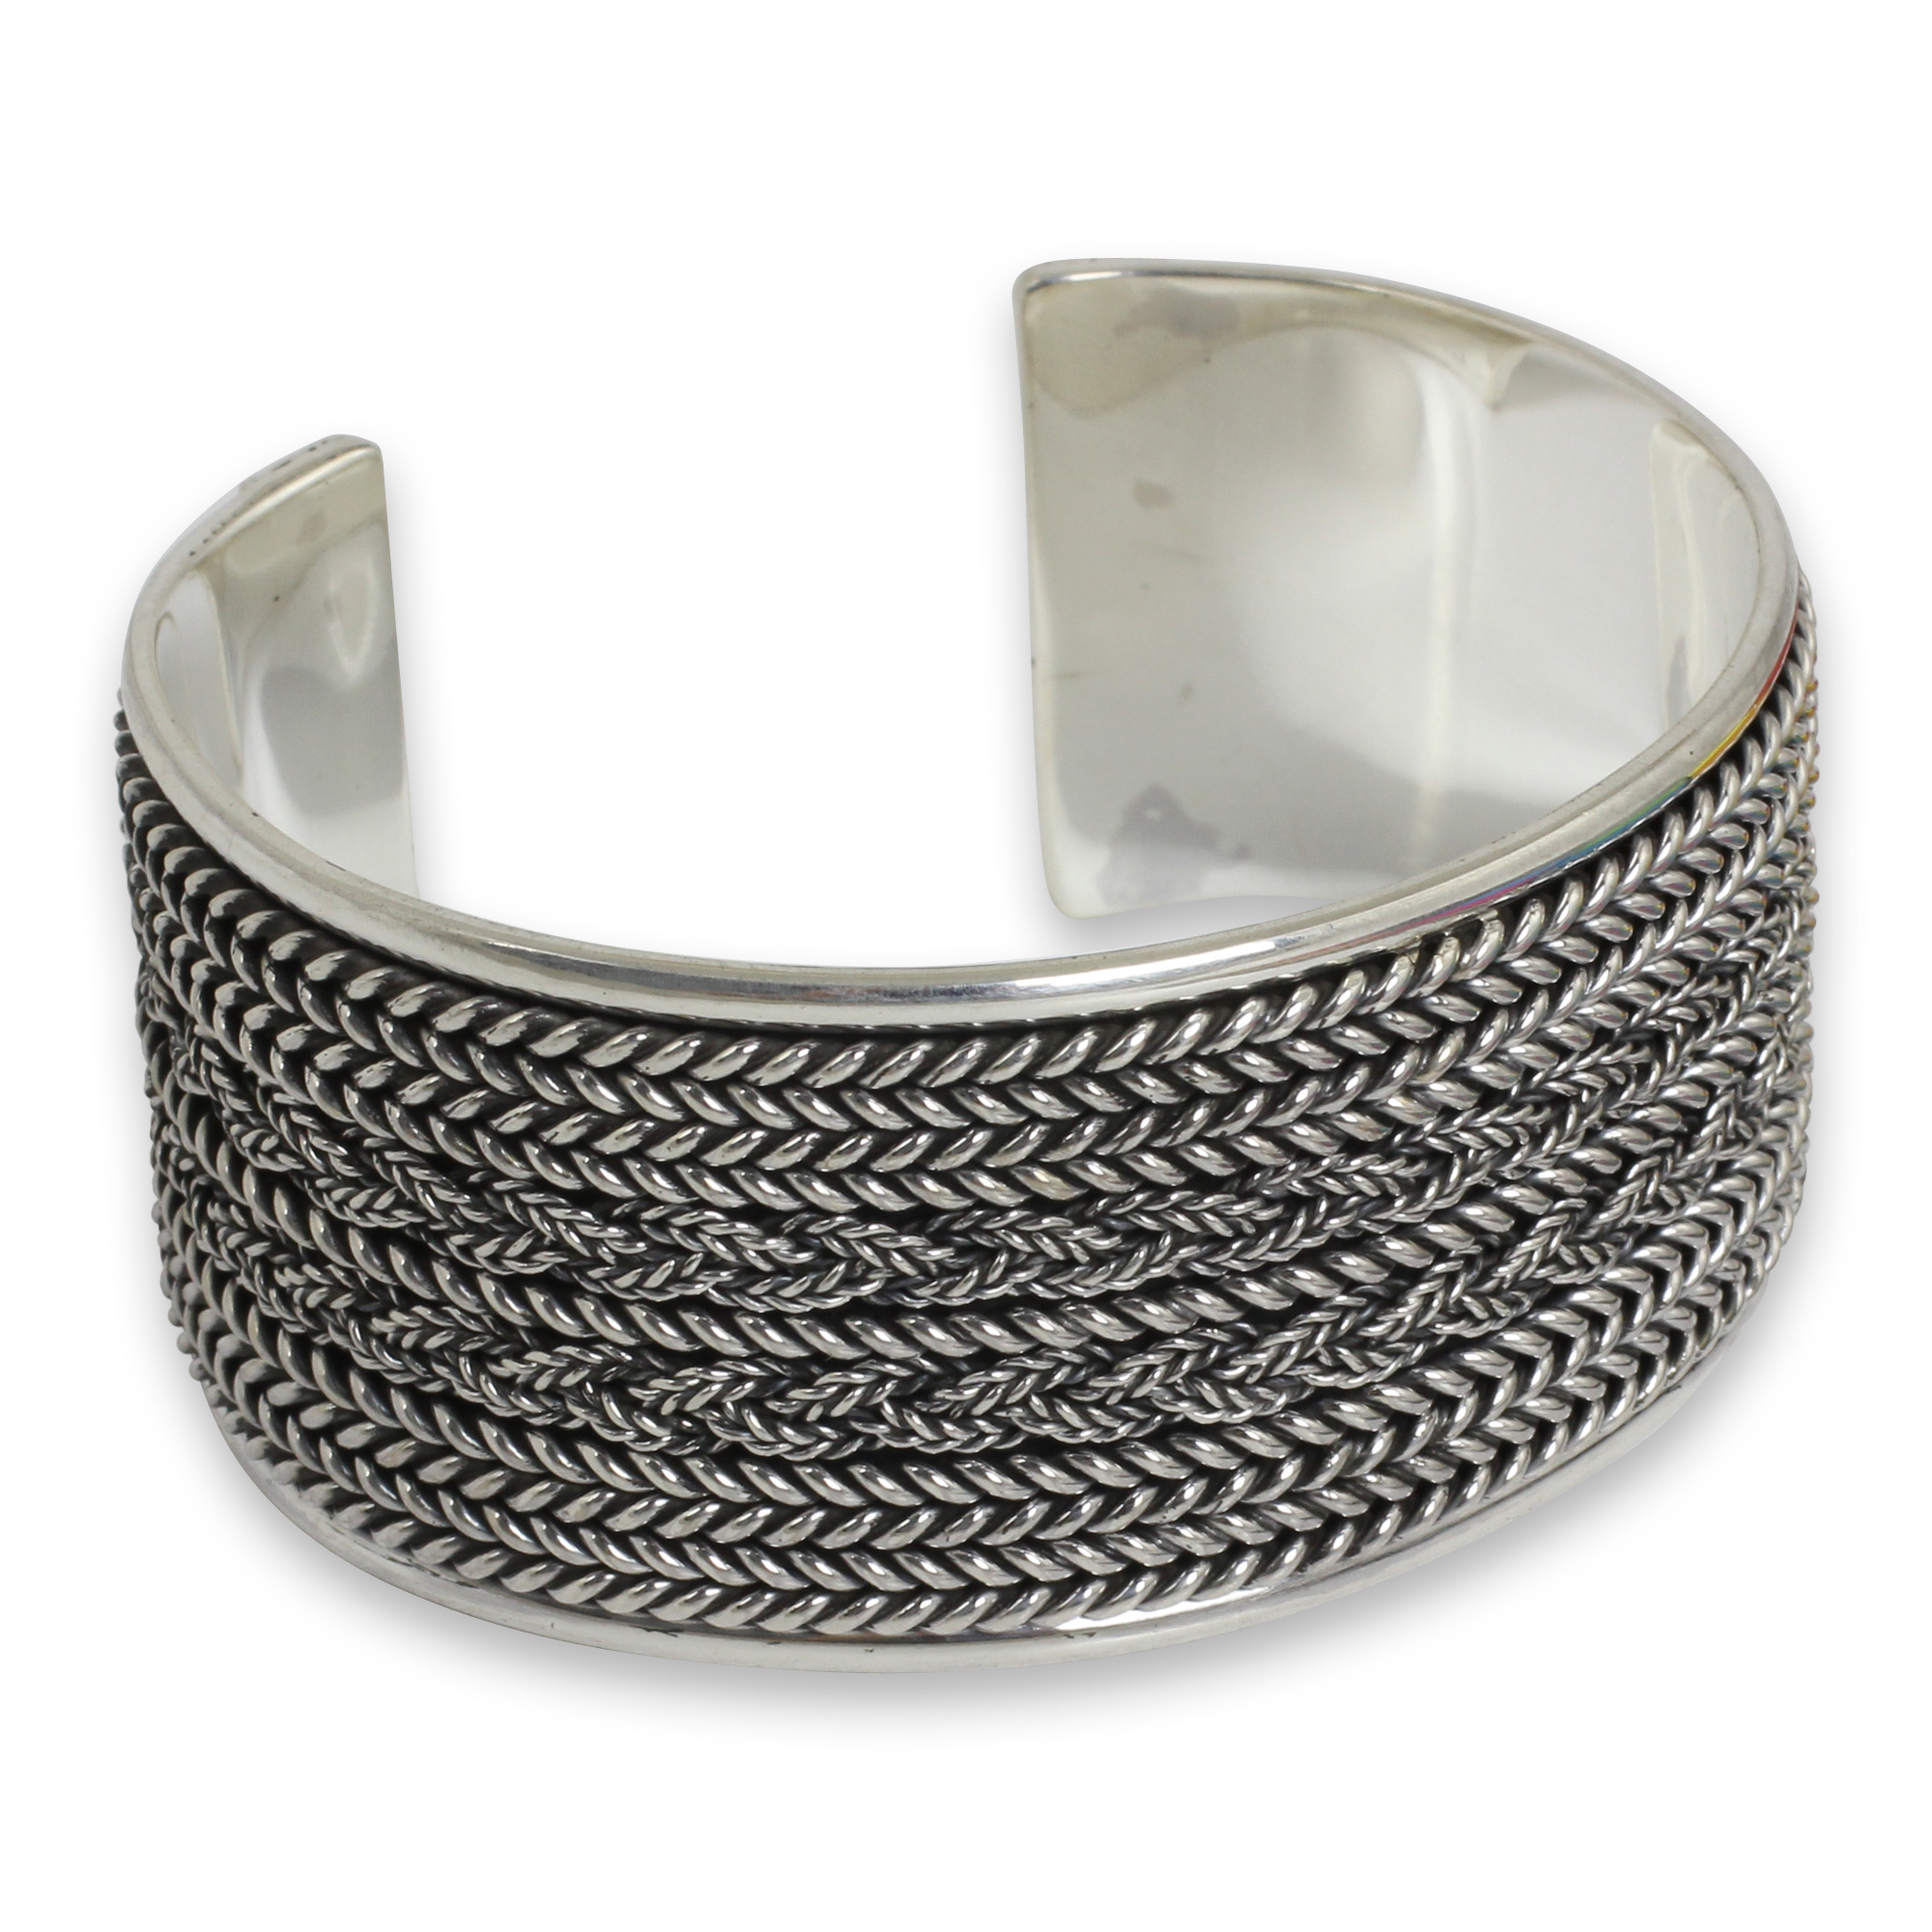 Hand Crafted Sterling Silver Cuff Bracelet - Wicker Weave | NOVICA